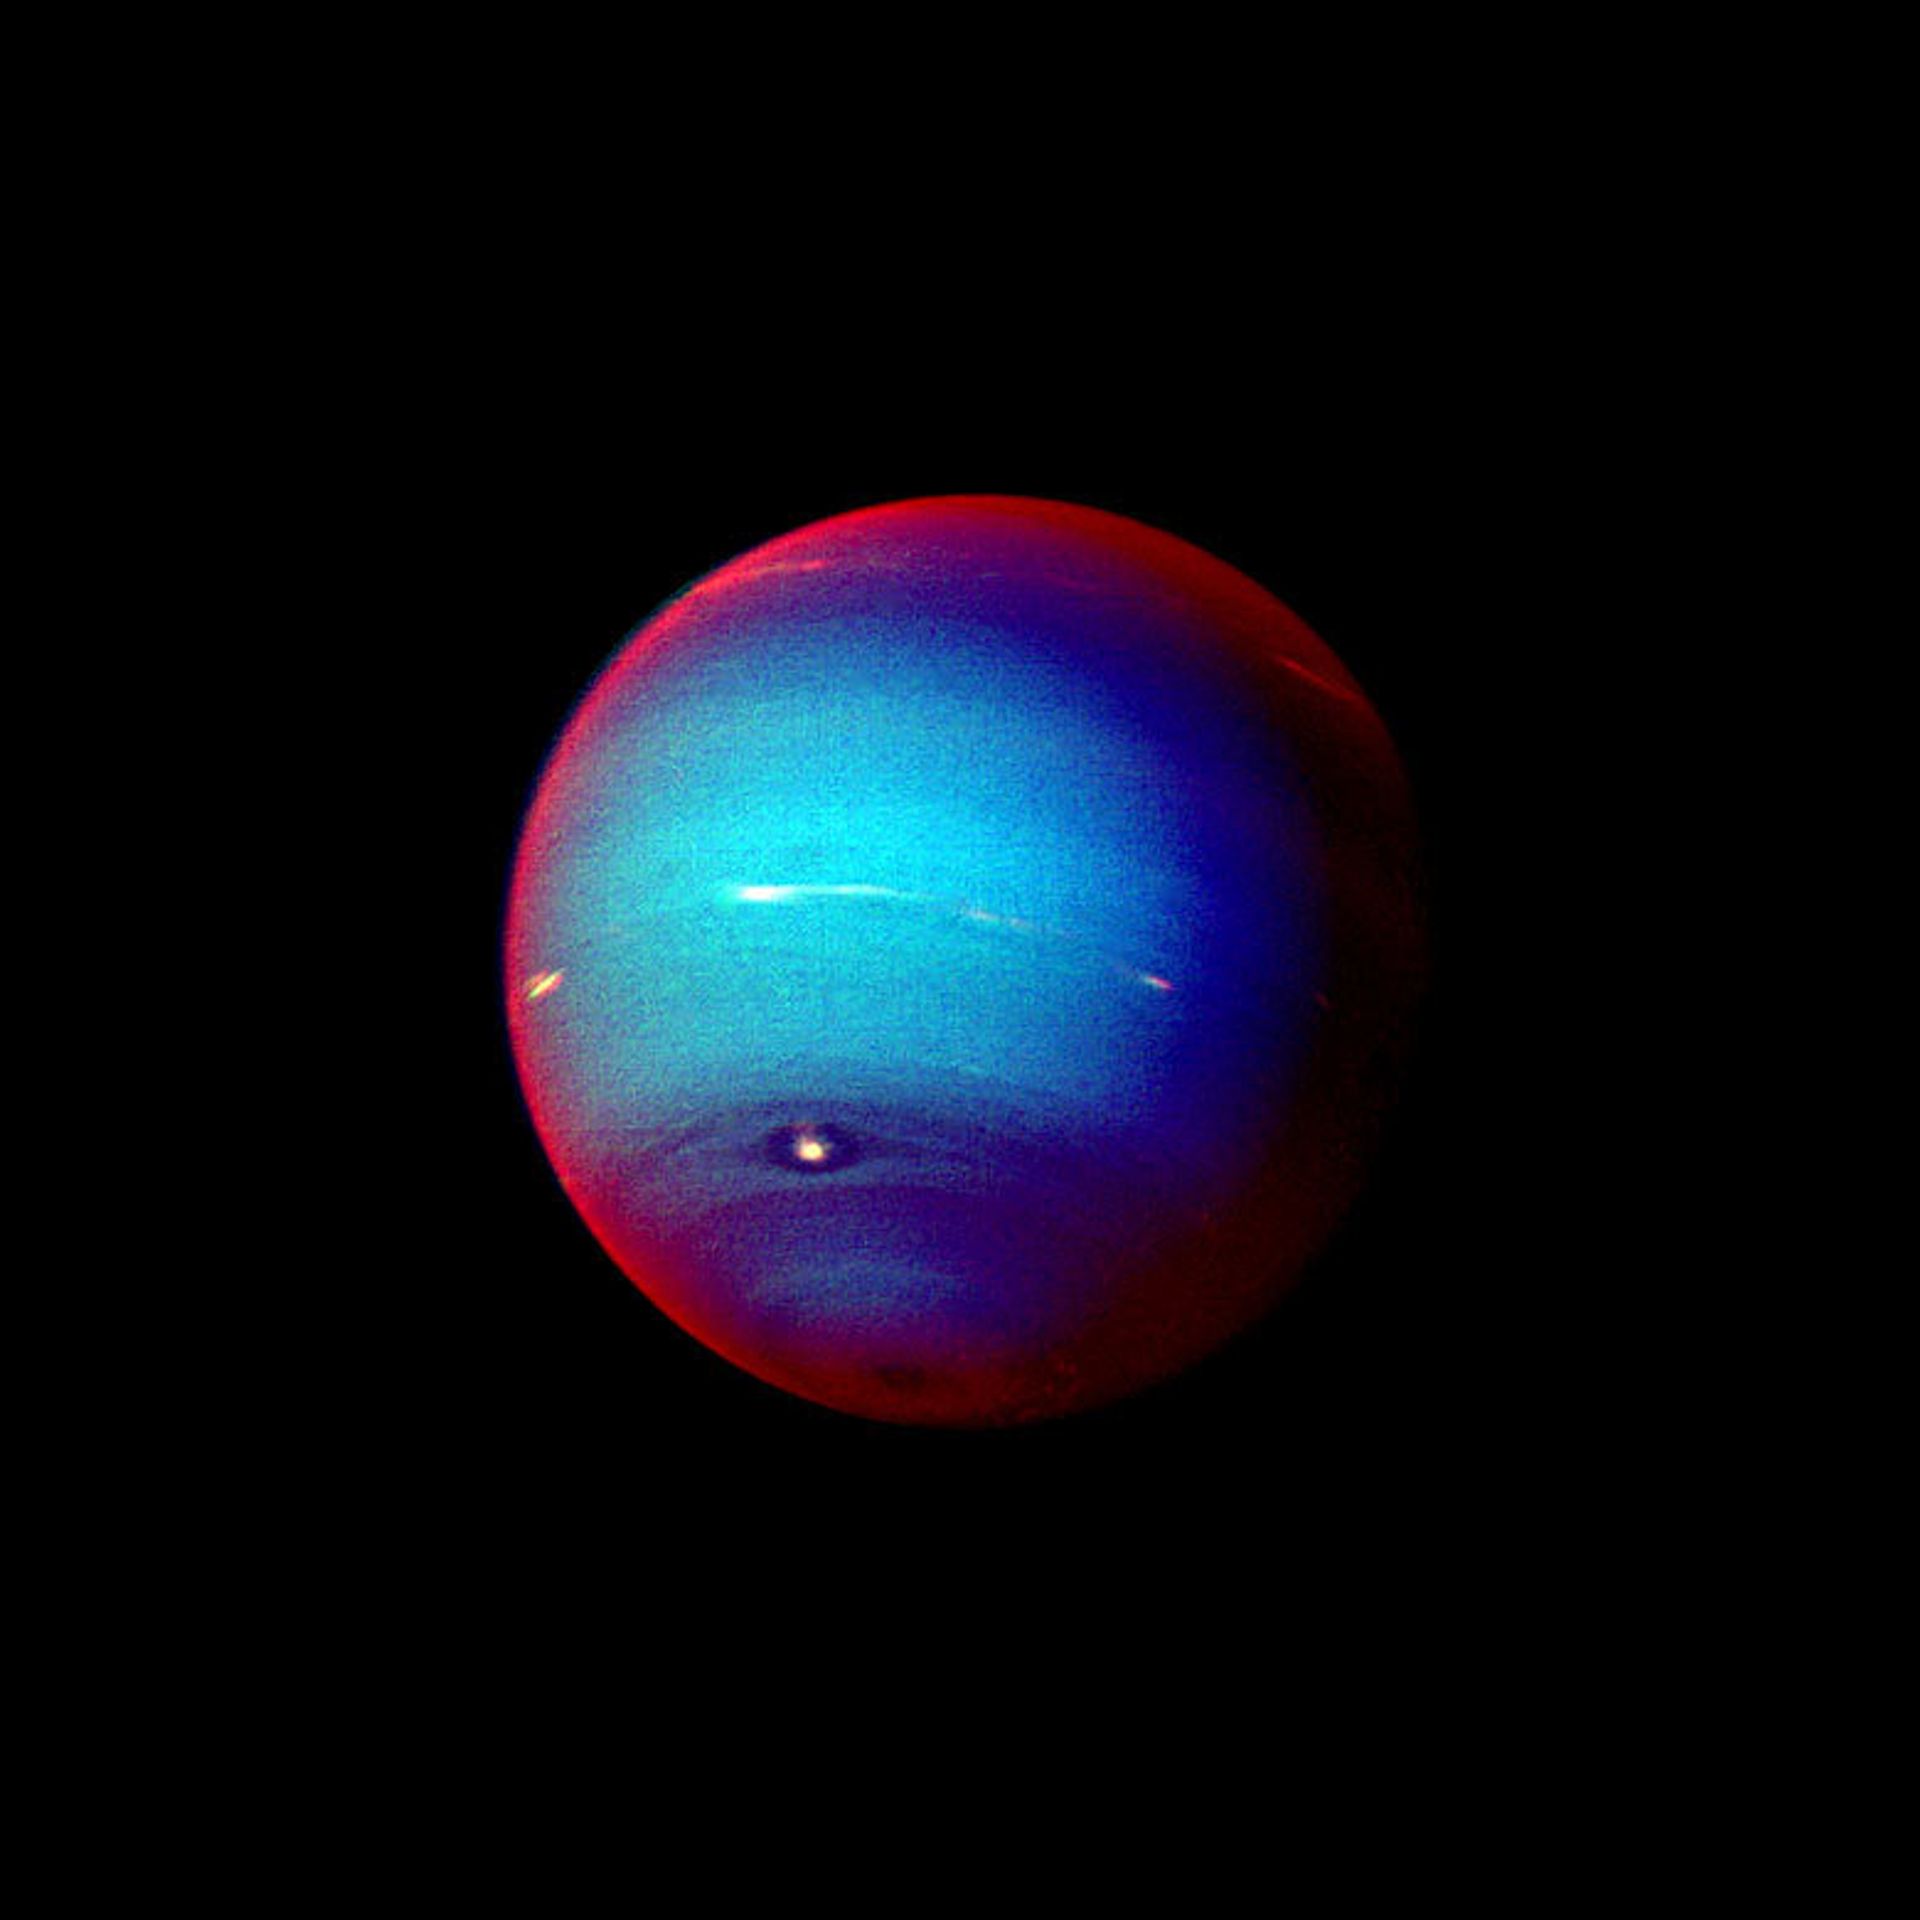 GALERIE: Co nafotila sonda Voyager 1 - Neptun - 1 - GALERIE: Co nafotila sonda Voyager 1 - NEPTUN (4/4)